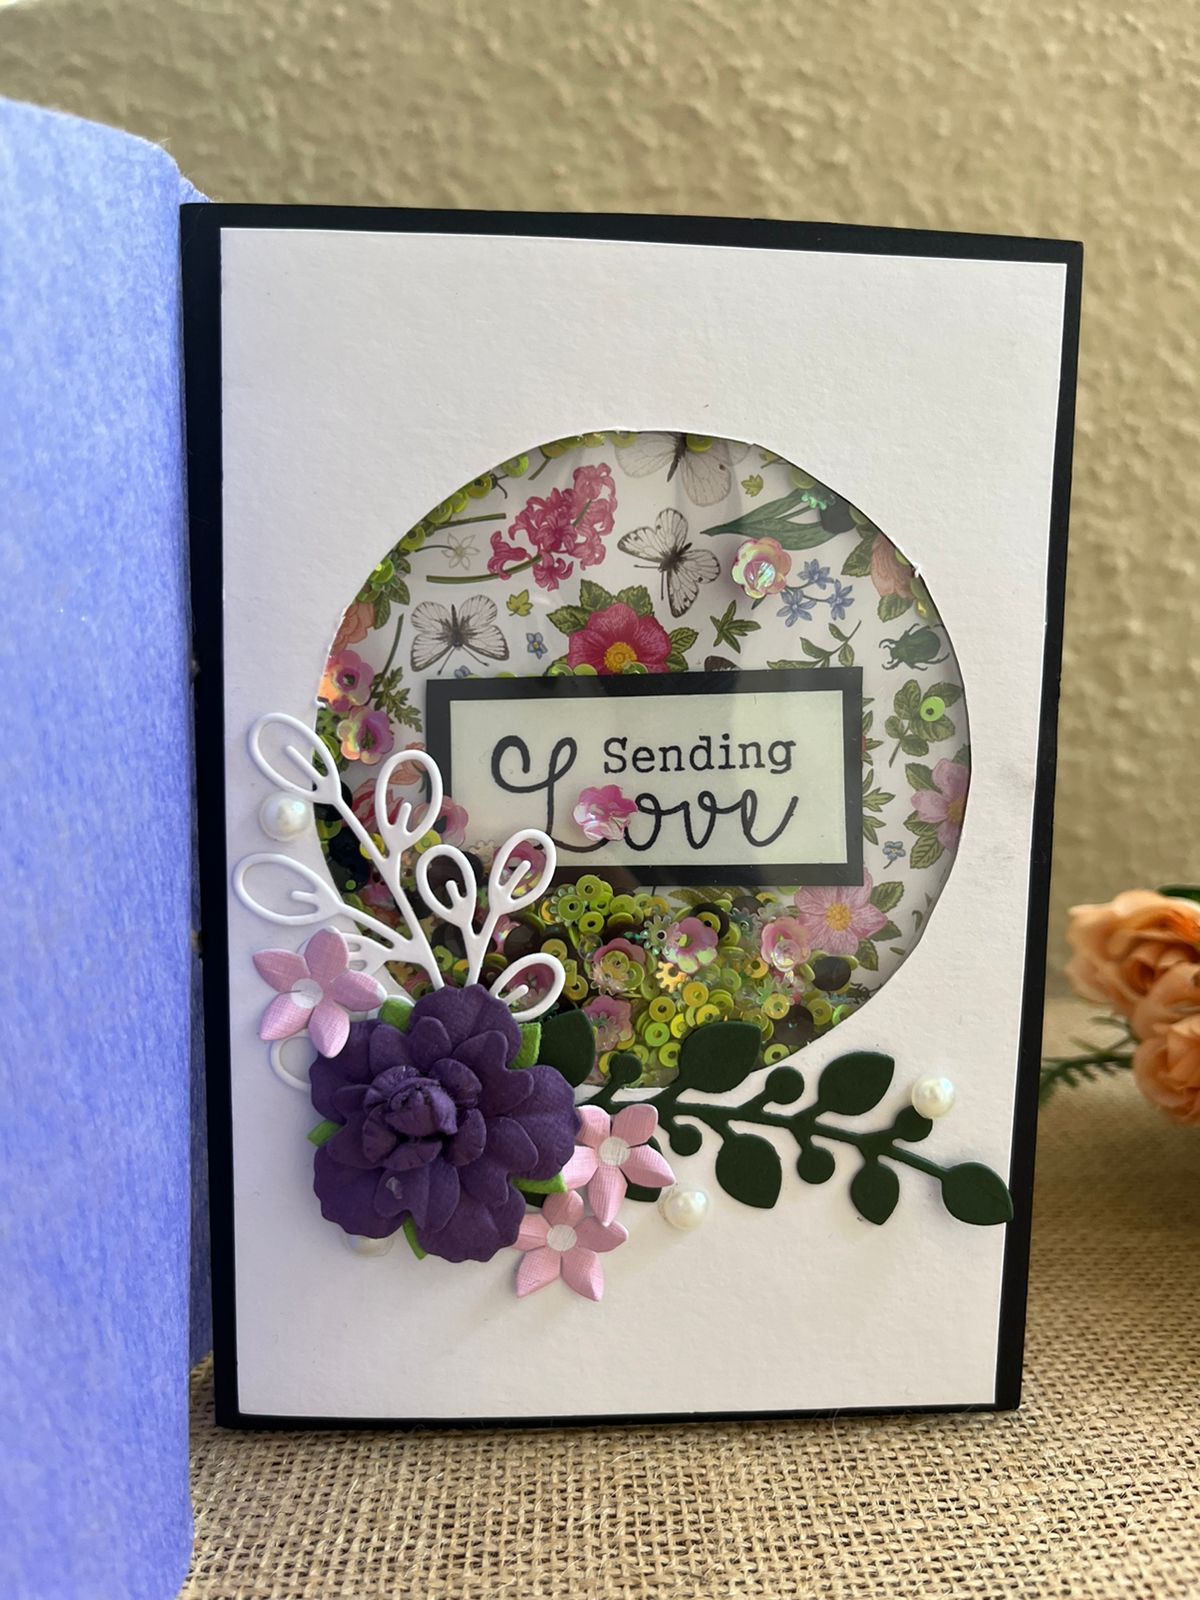 Sending Love Greeting card